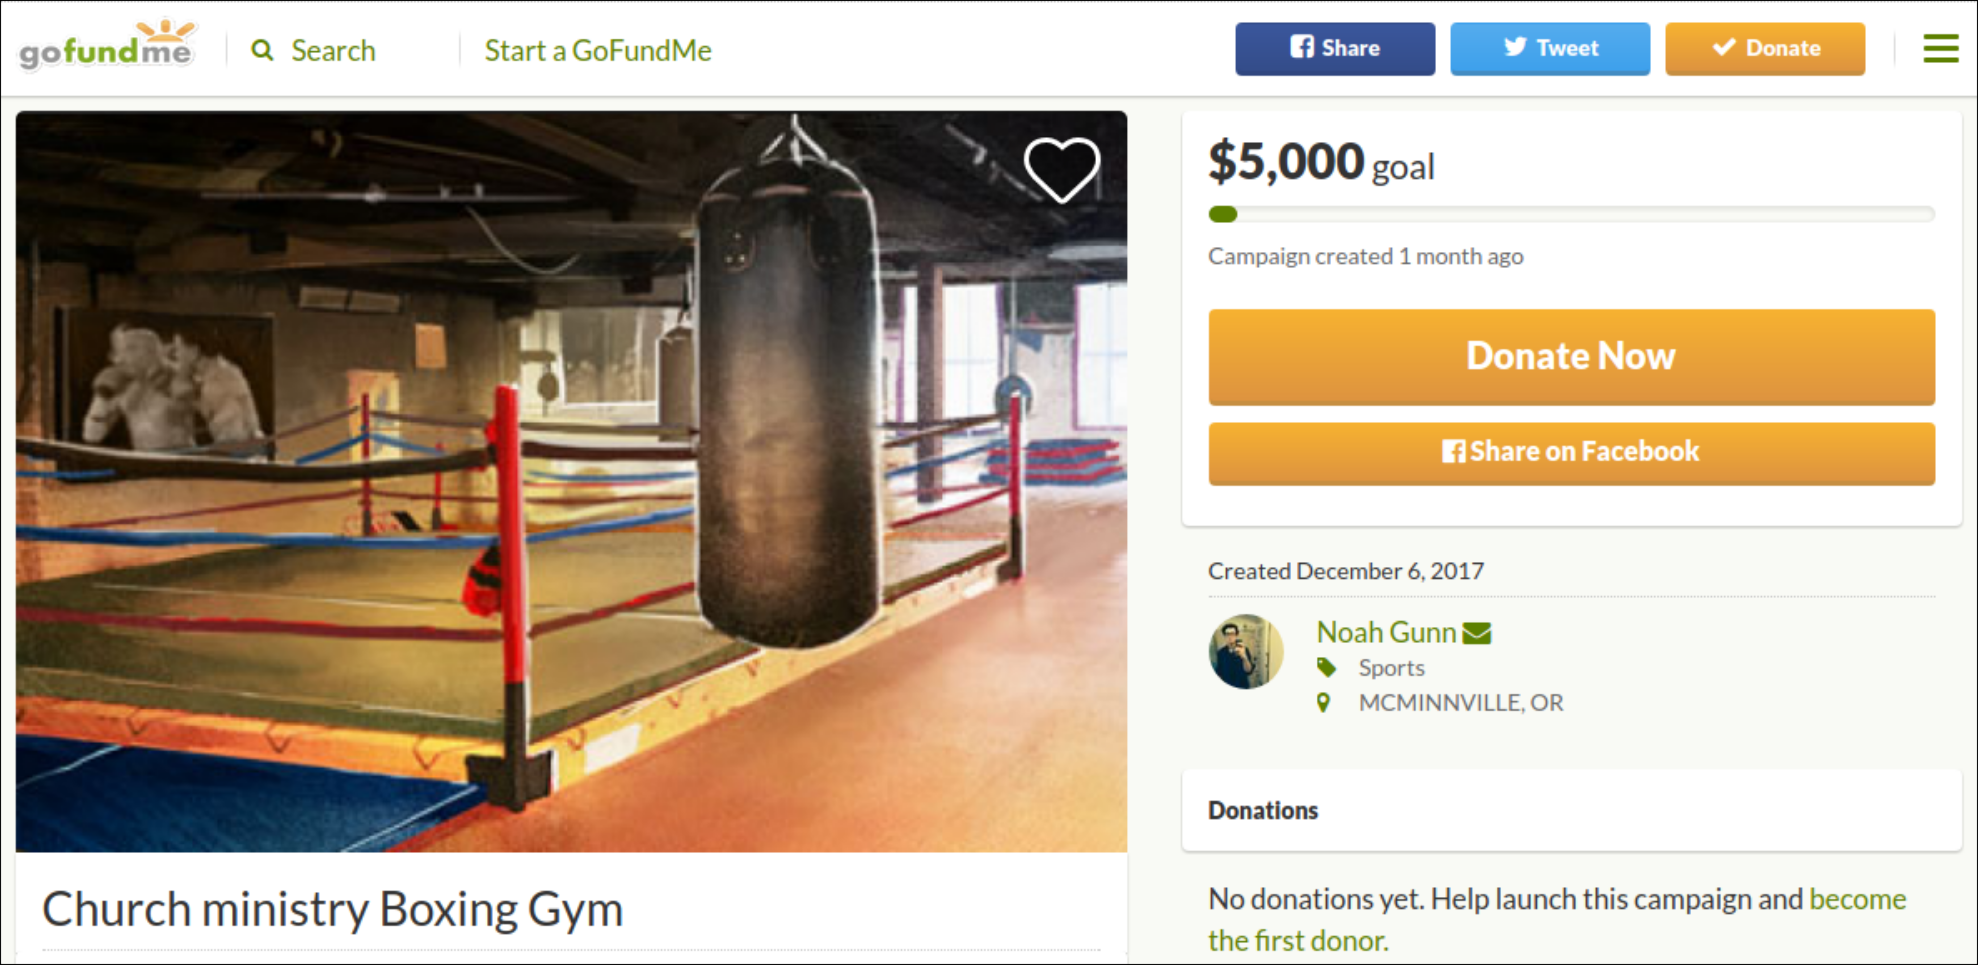 Noah Gunn attempts to raise money for a boxing gym